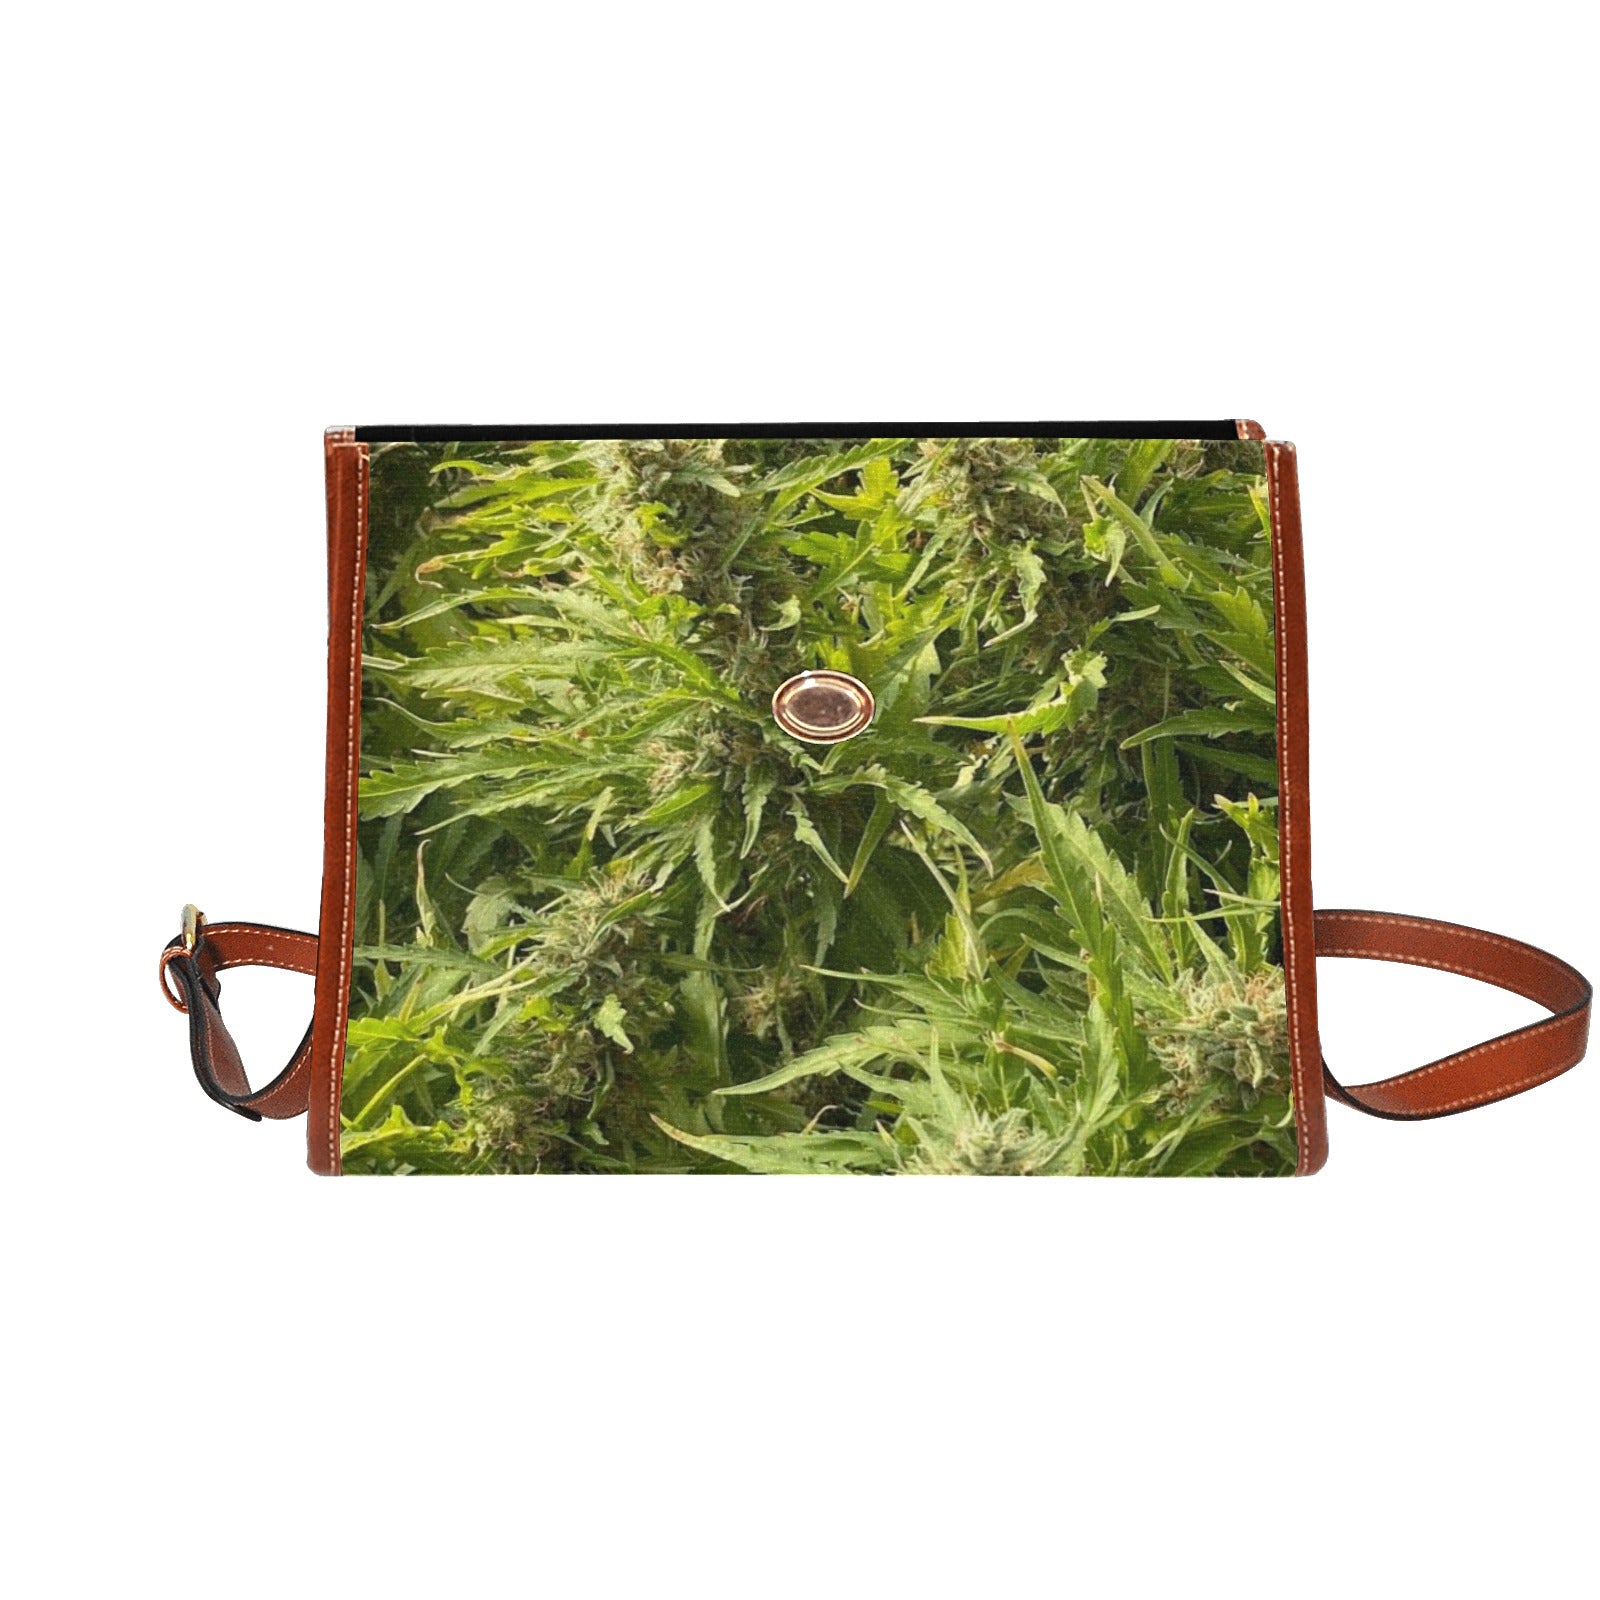 fz weed hand bag all over print waterproof canvas bag(model1641)(brown strap)